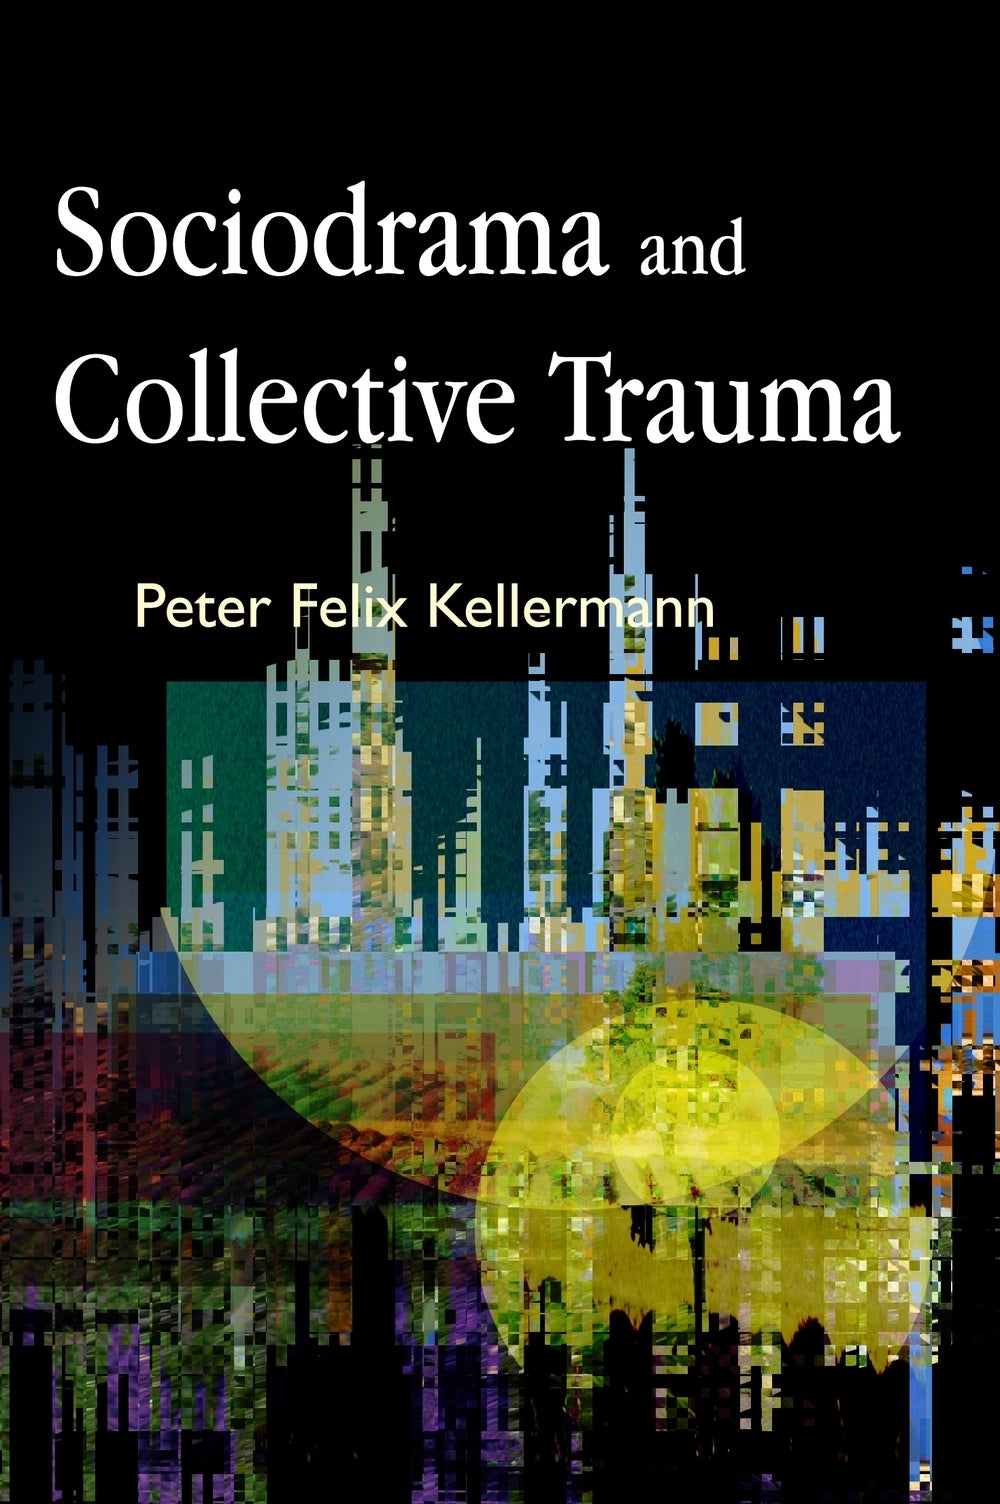 Sociodrama and Collective Trauma by Peter Felix Kellermann